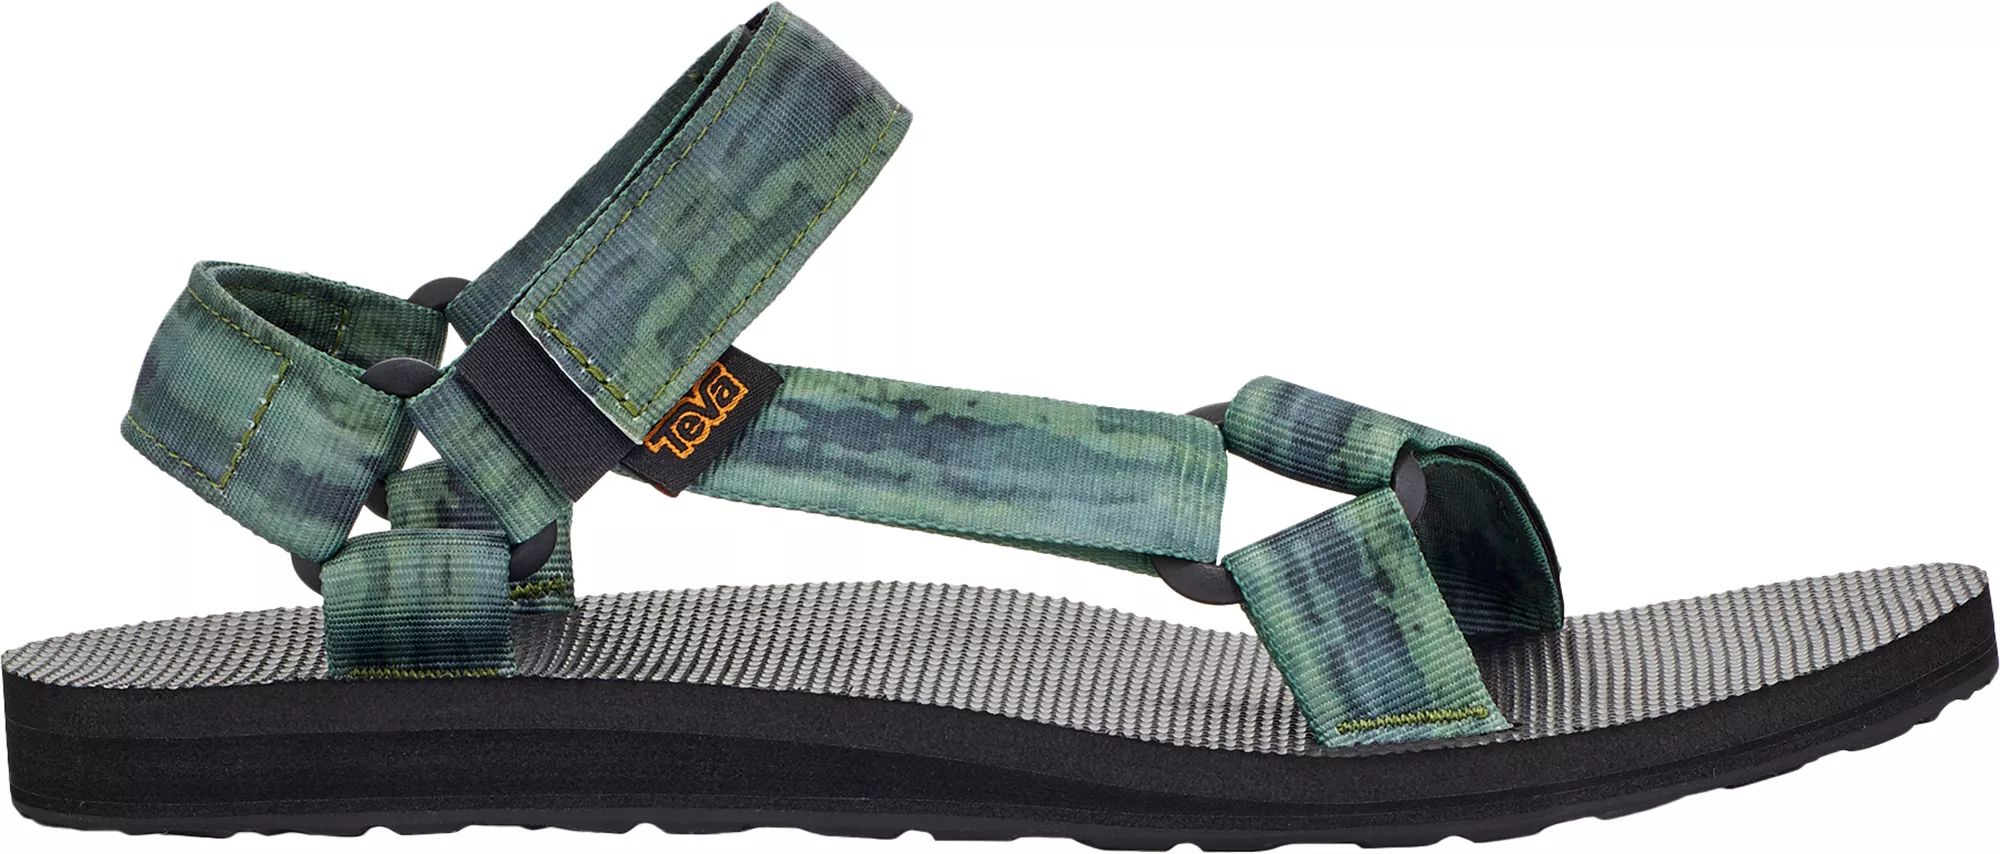 TEVA Men's Original Universal Tie-Dye Sandals, Size 8, Green | Public Lands